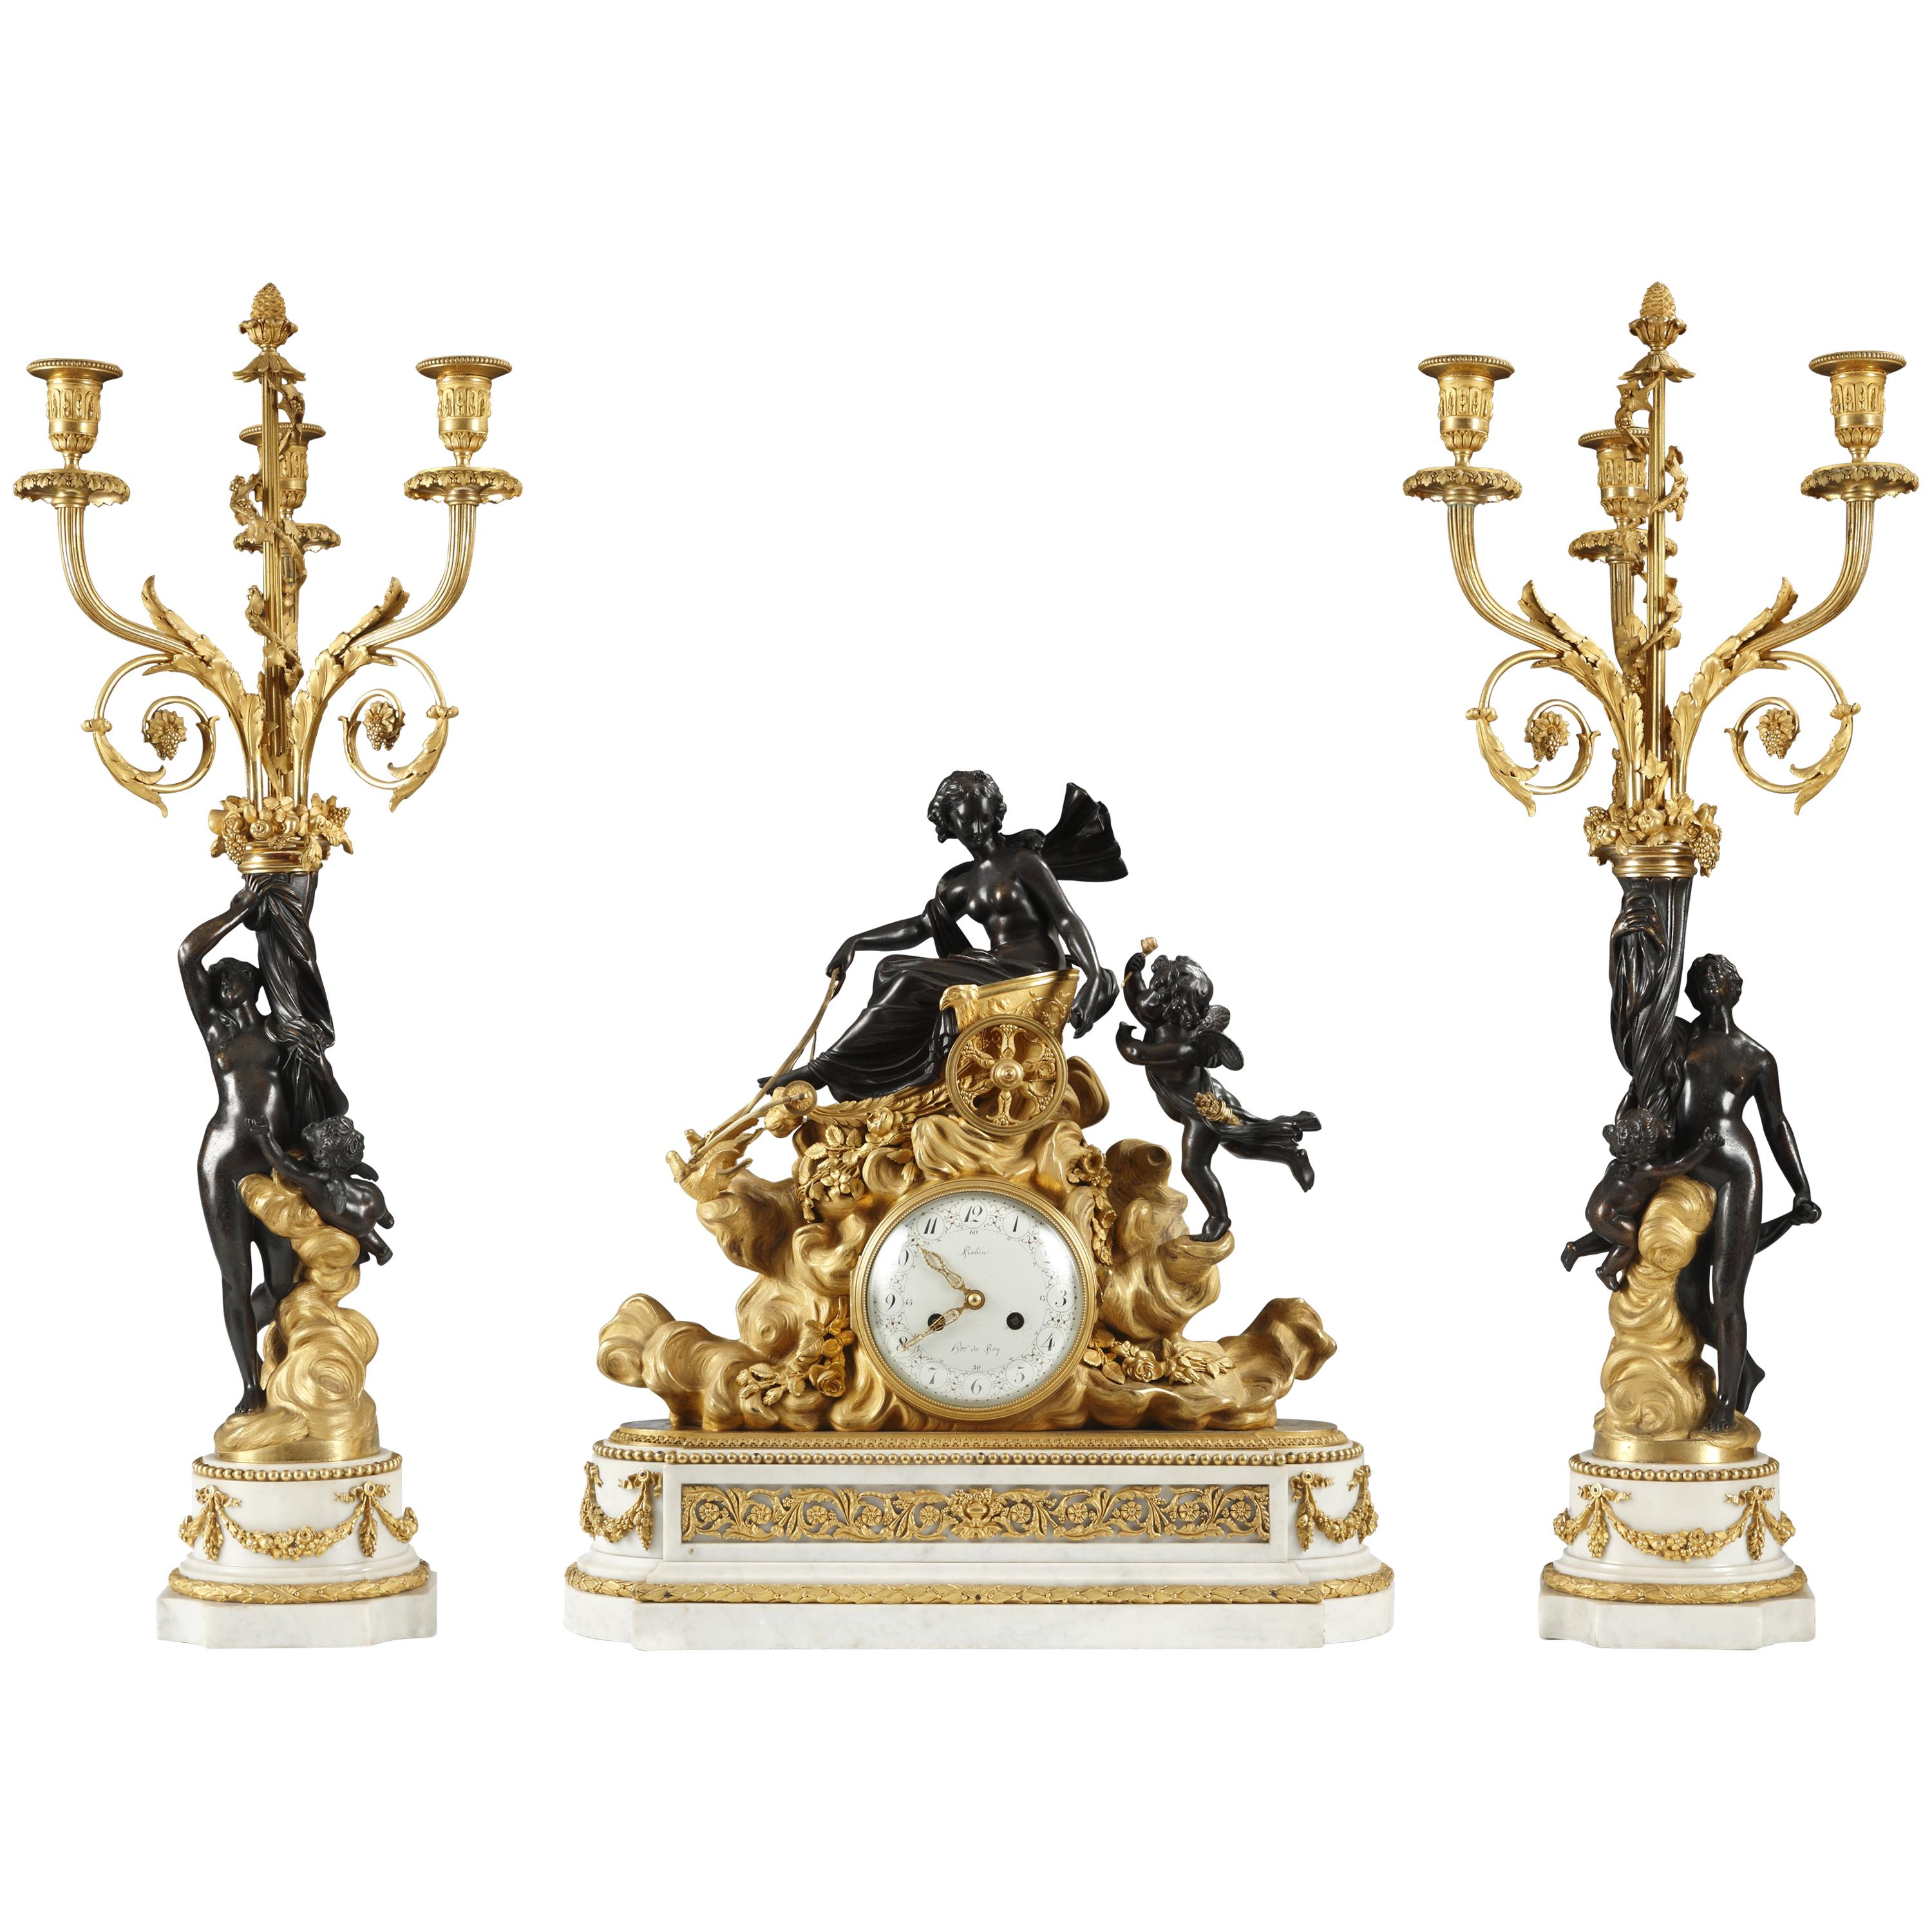 Refined Louis XVI Style "Venus" Mantel Clock Set by Robin, Hgr du Roy